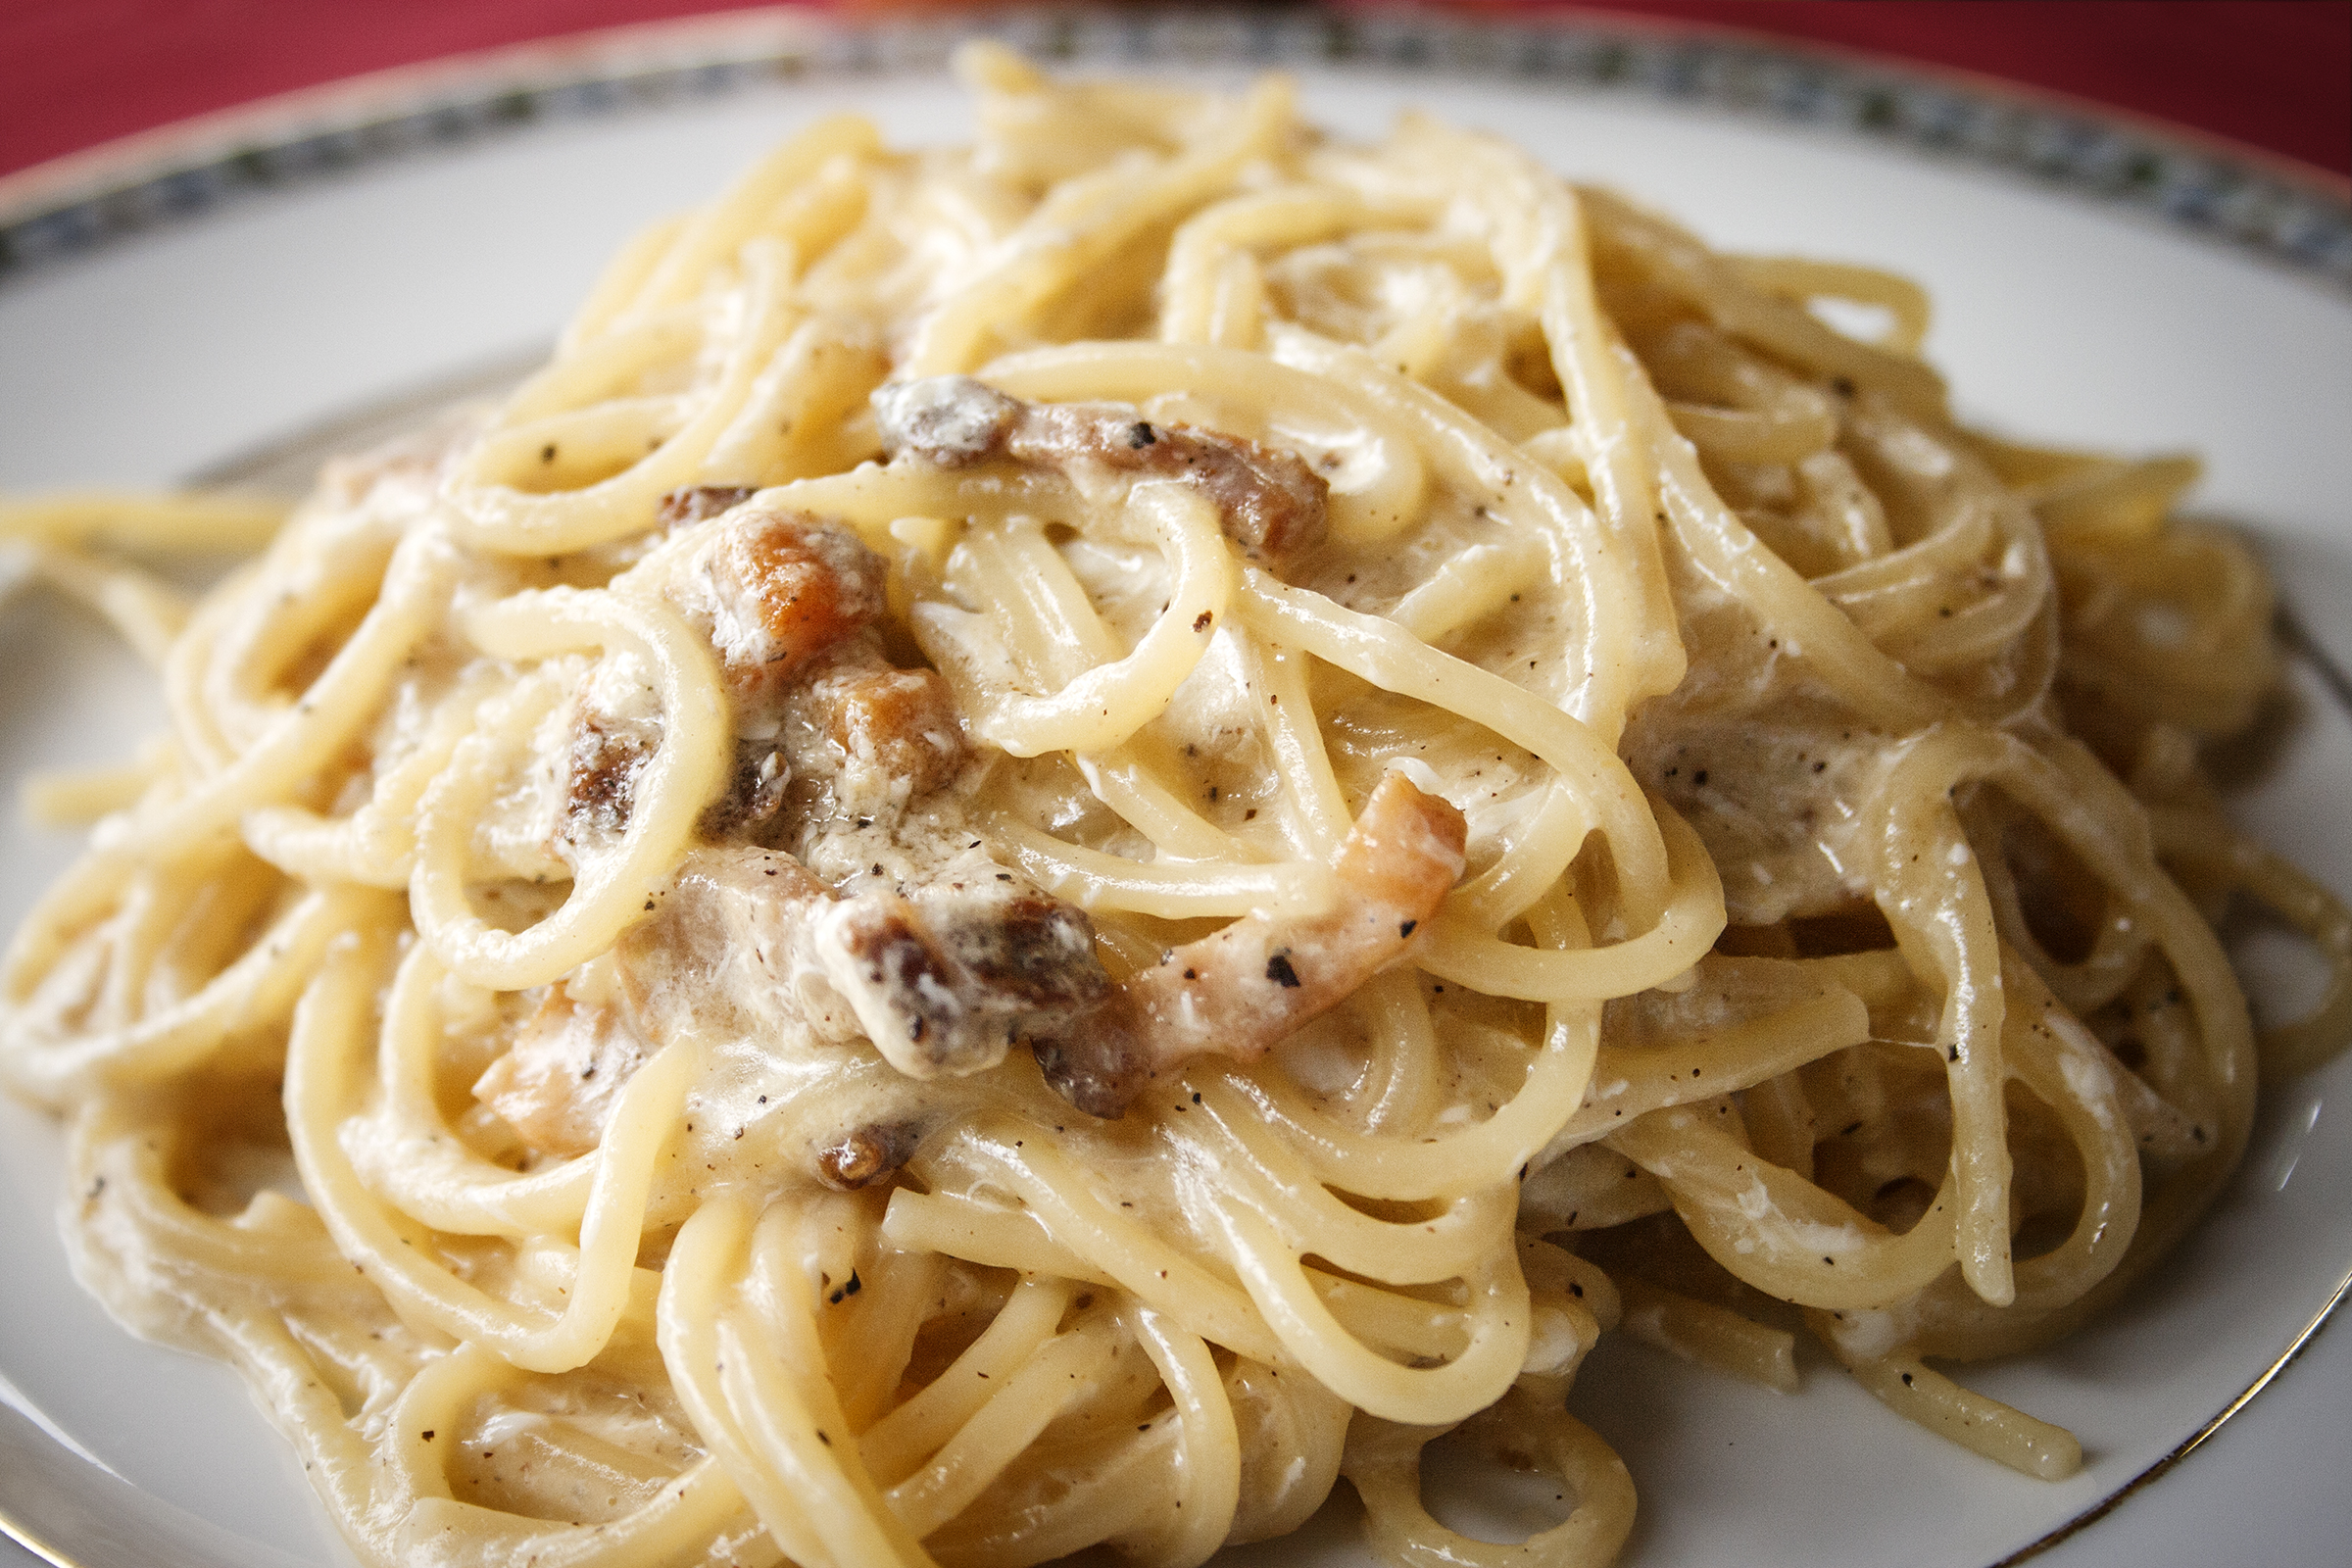 Spaghetti carbonara on plate